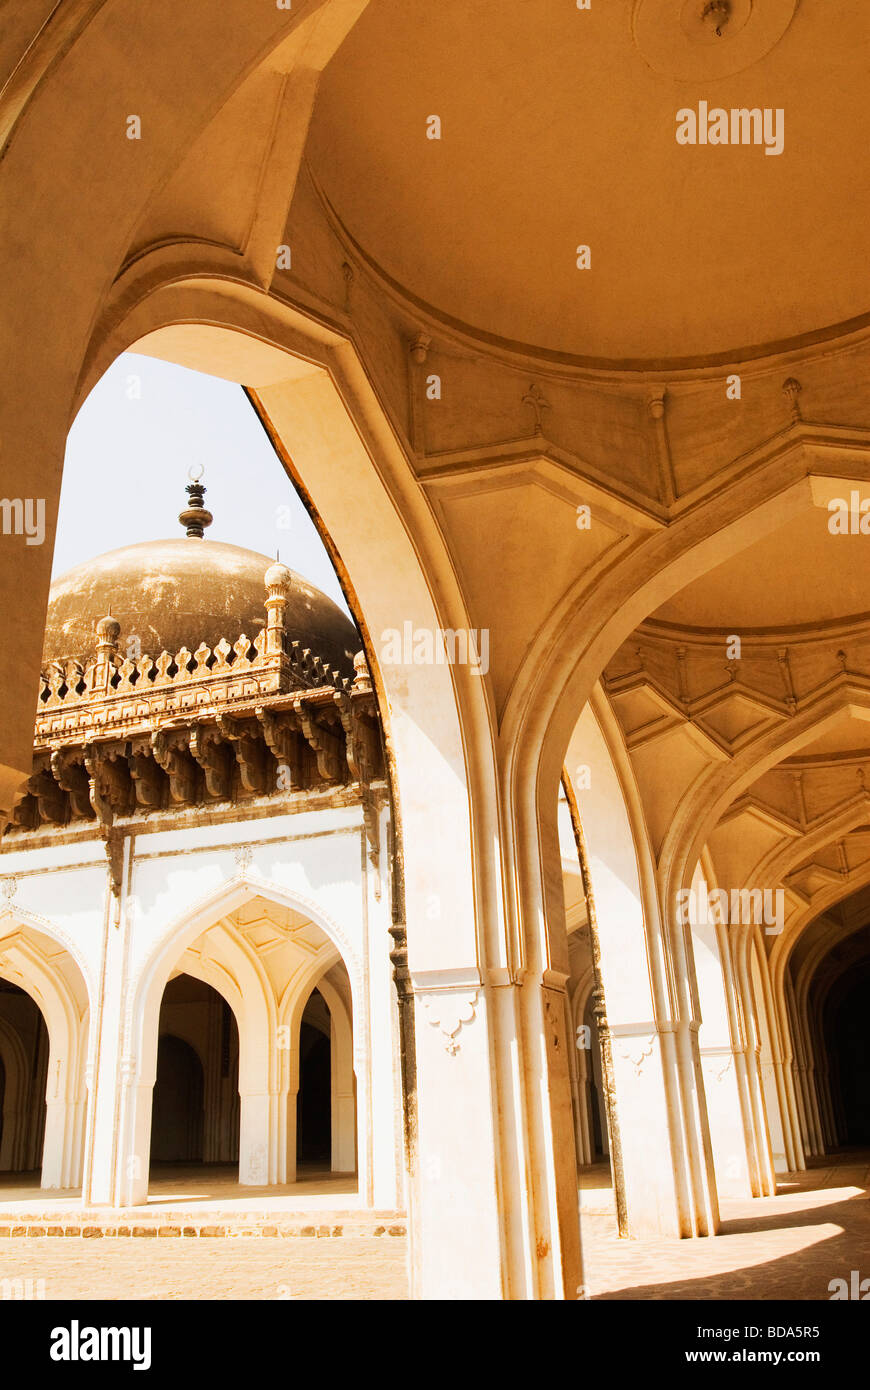 Archway in a building, Gol Gumbaz, Bijapur, Karnataka, India Stock Photo